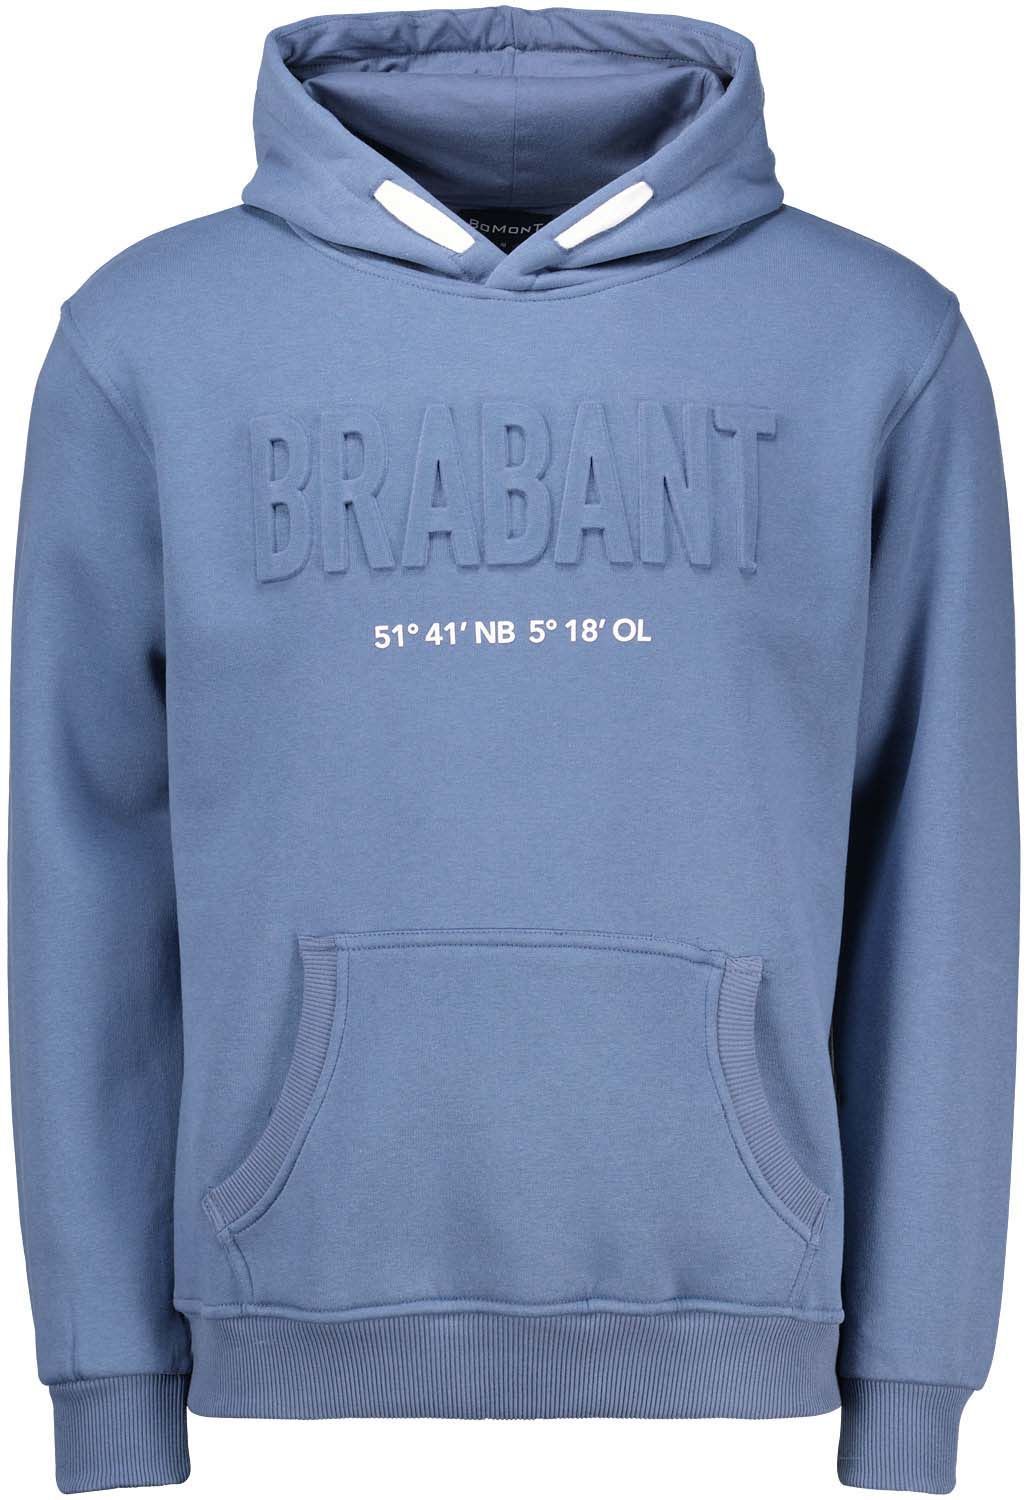 Brabant unisec hoodie sweater Blauw